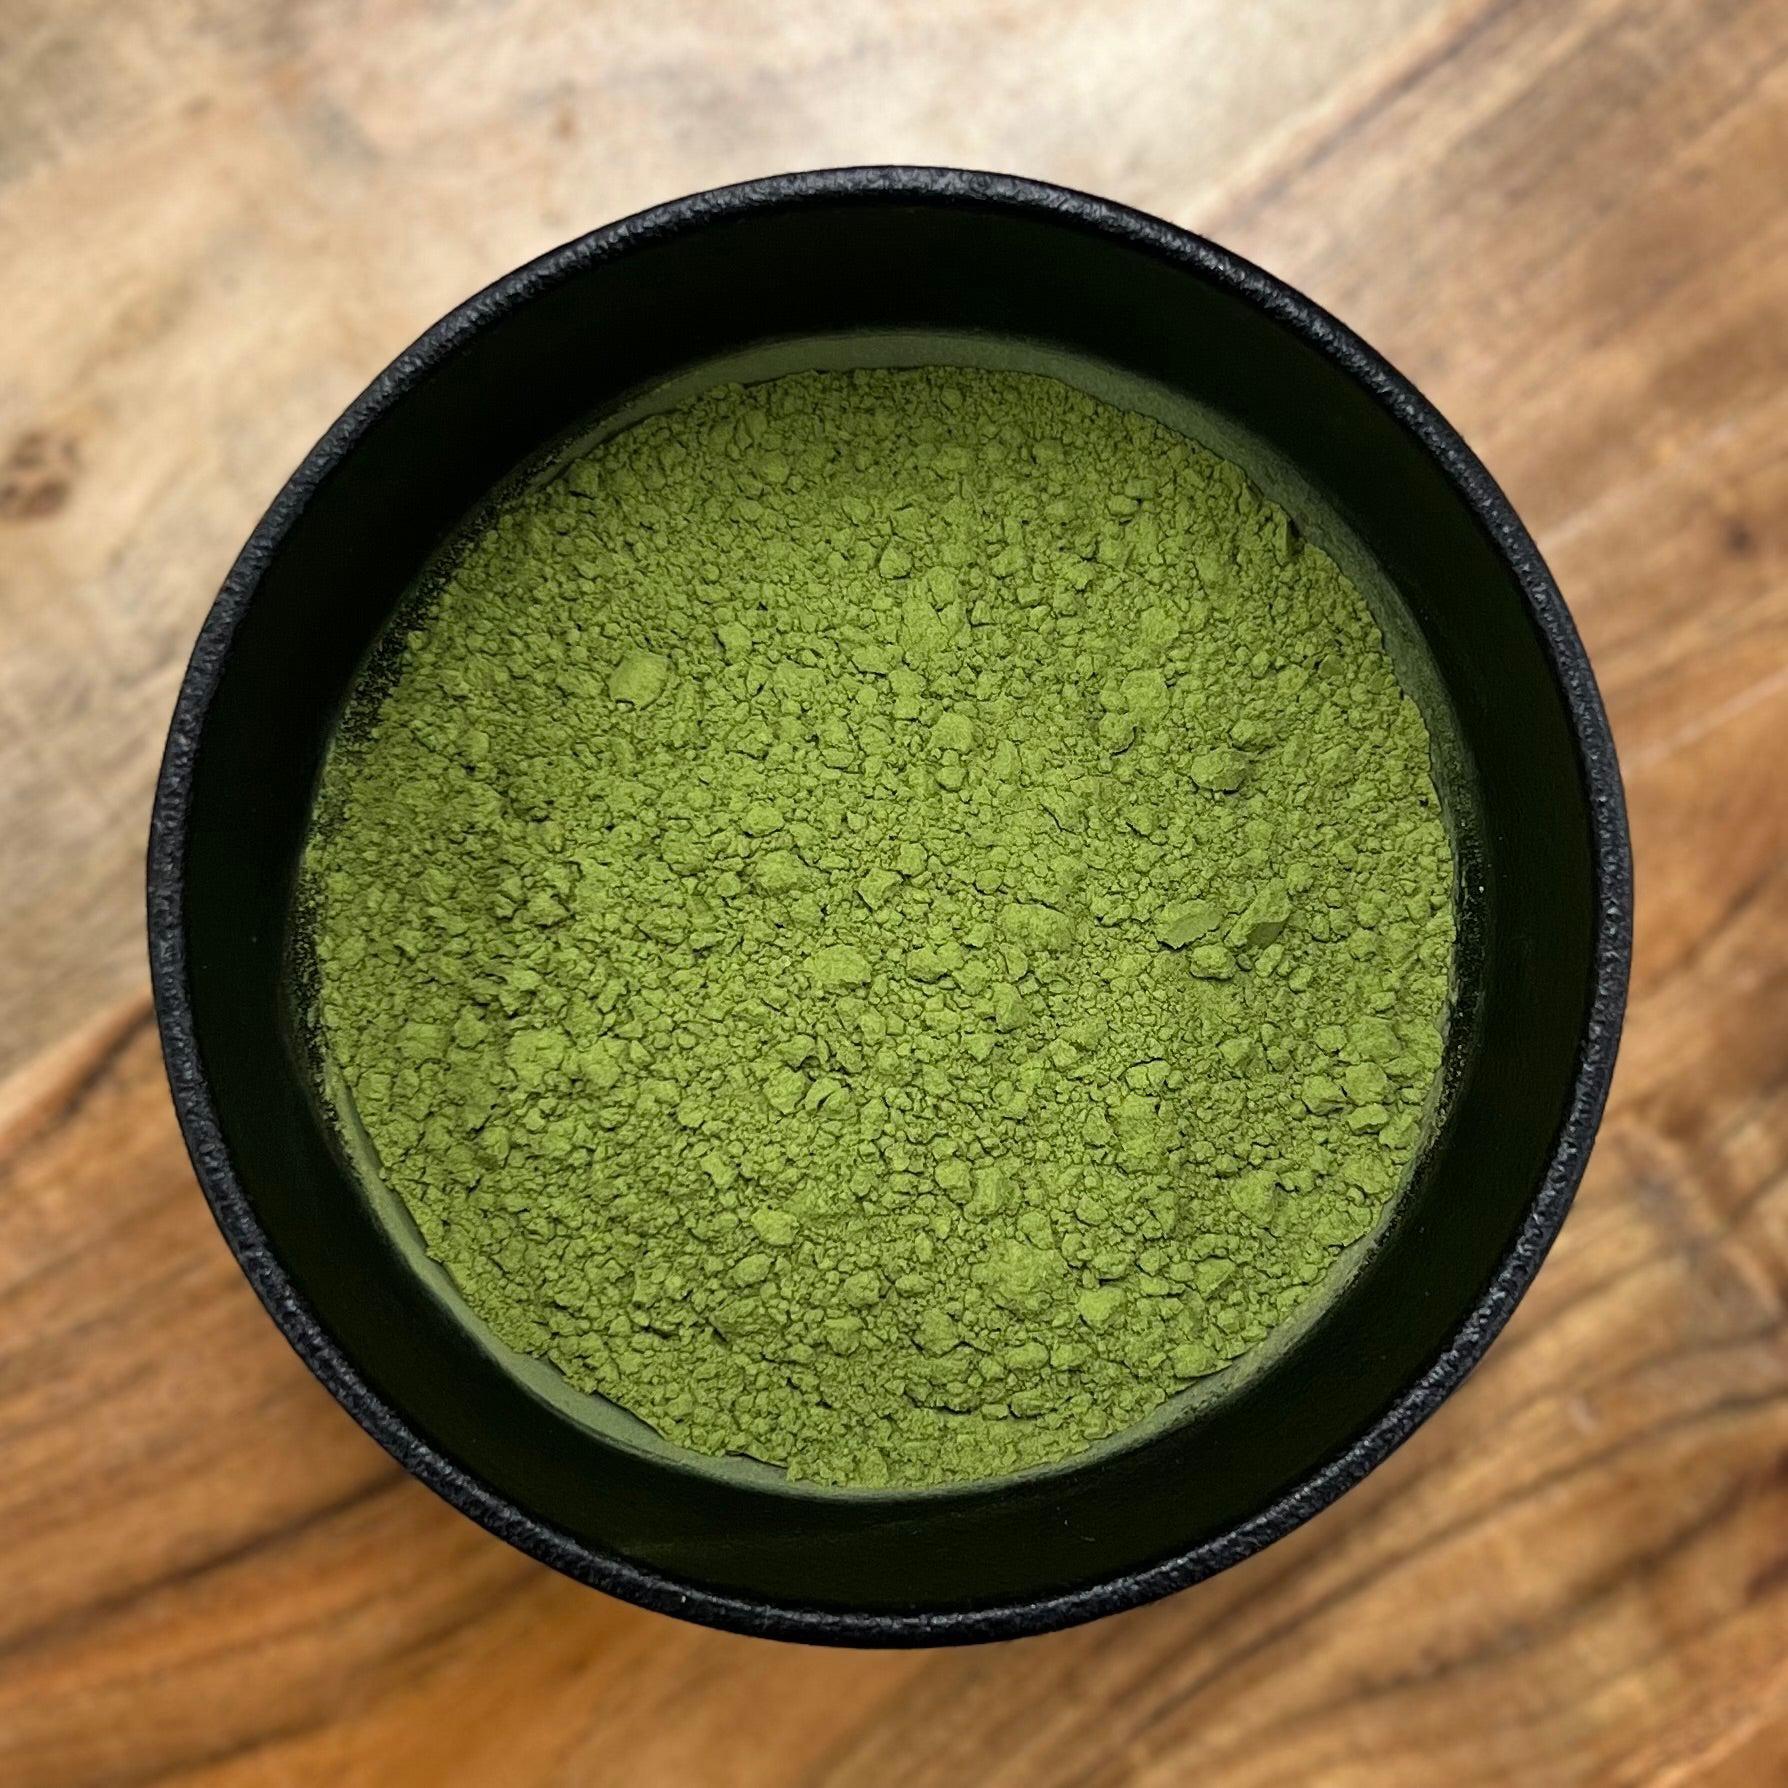 Organic Ceremonial Grade Japanese Matcha Green Tea Powder